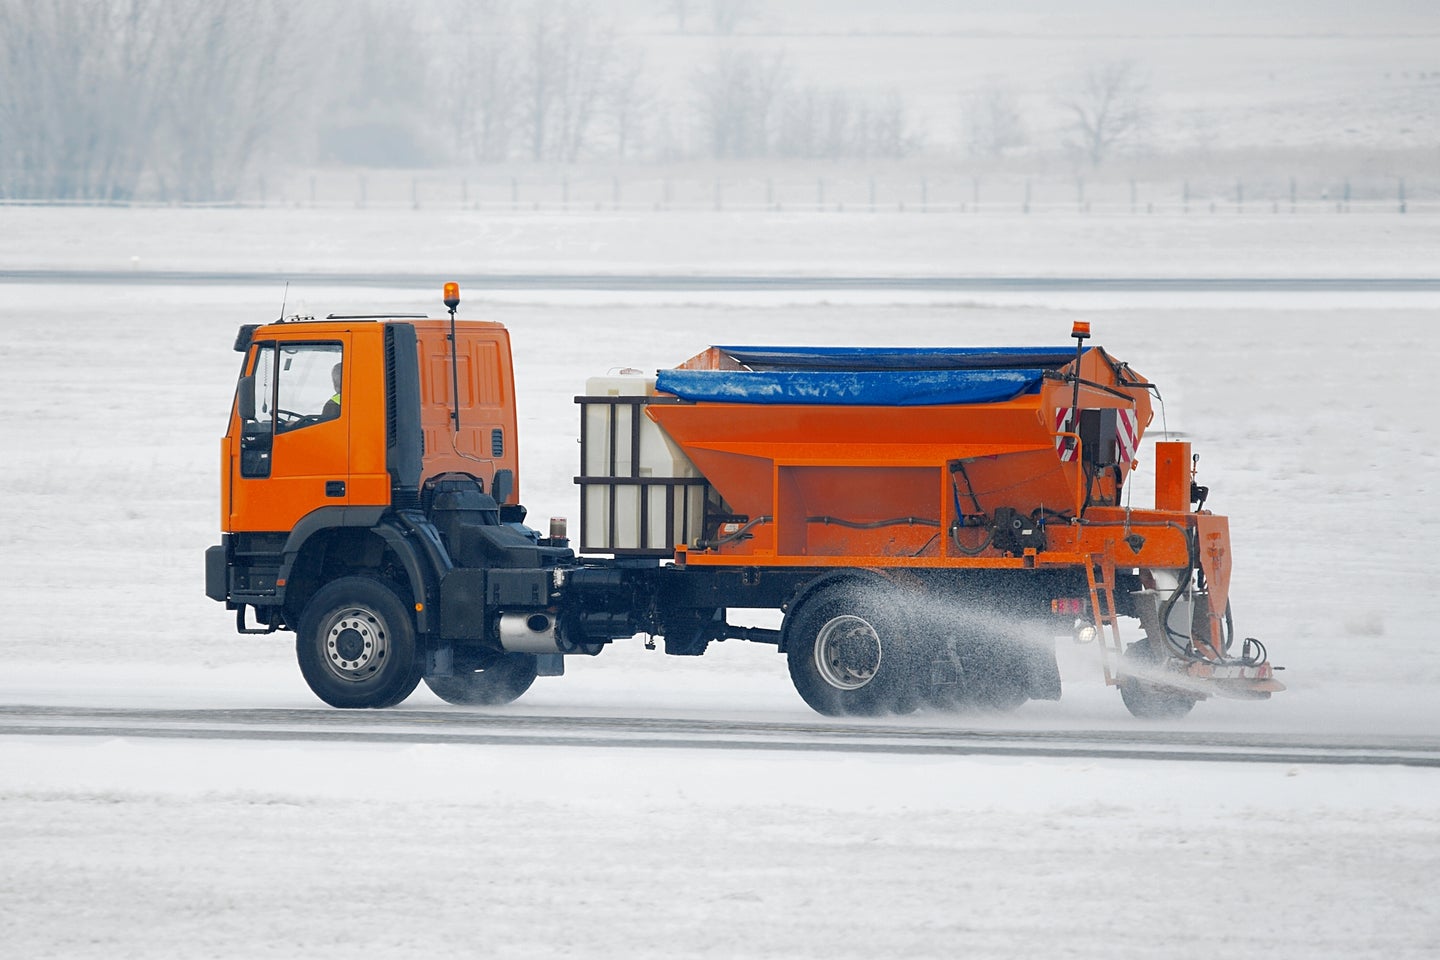 An orange truck spreading salt on a snowy airport runway